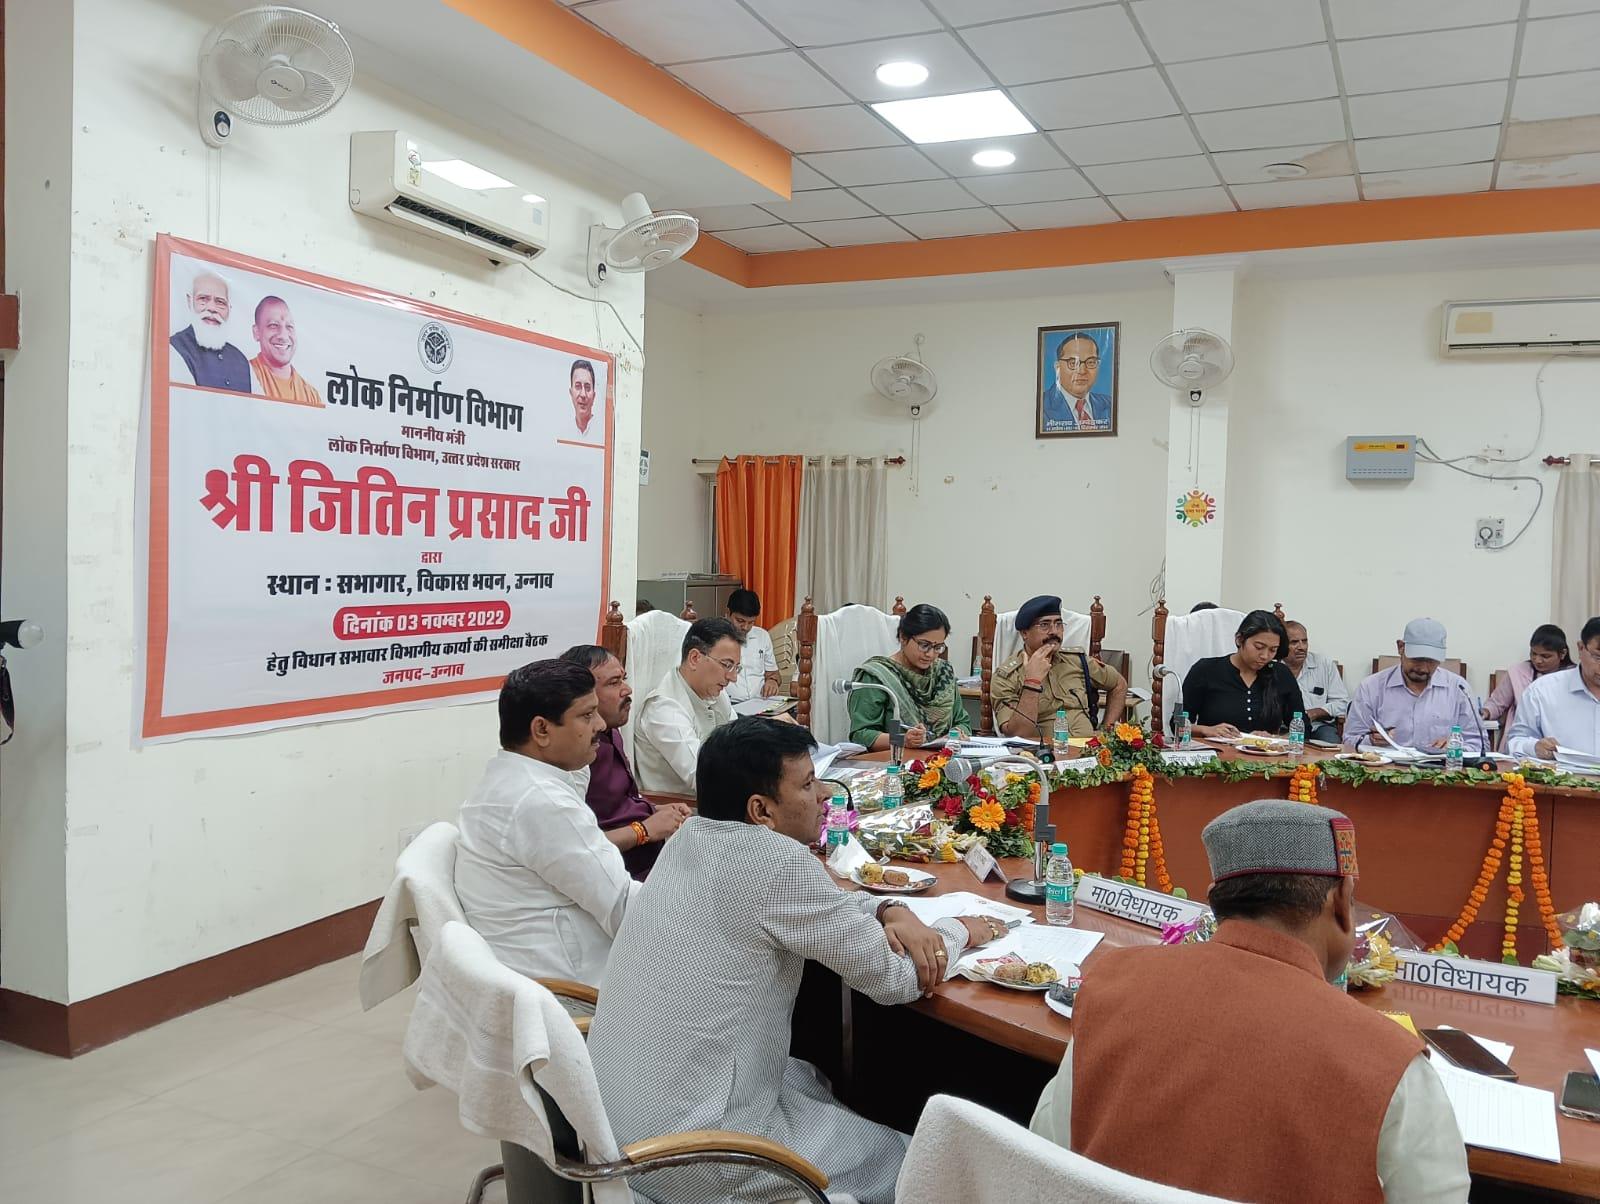 public-works-minister-jitin-prasada-reviewed-the-meeting2